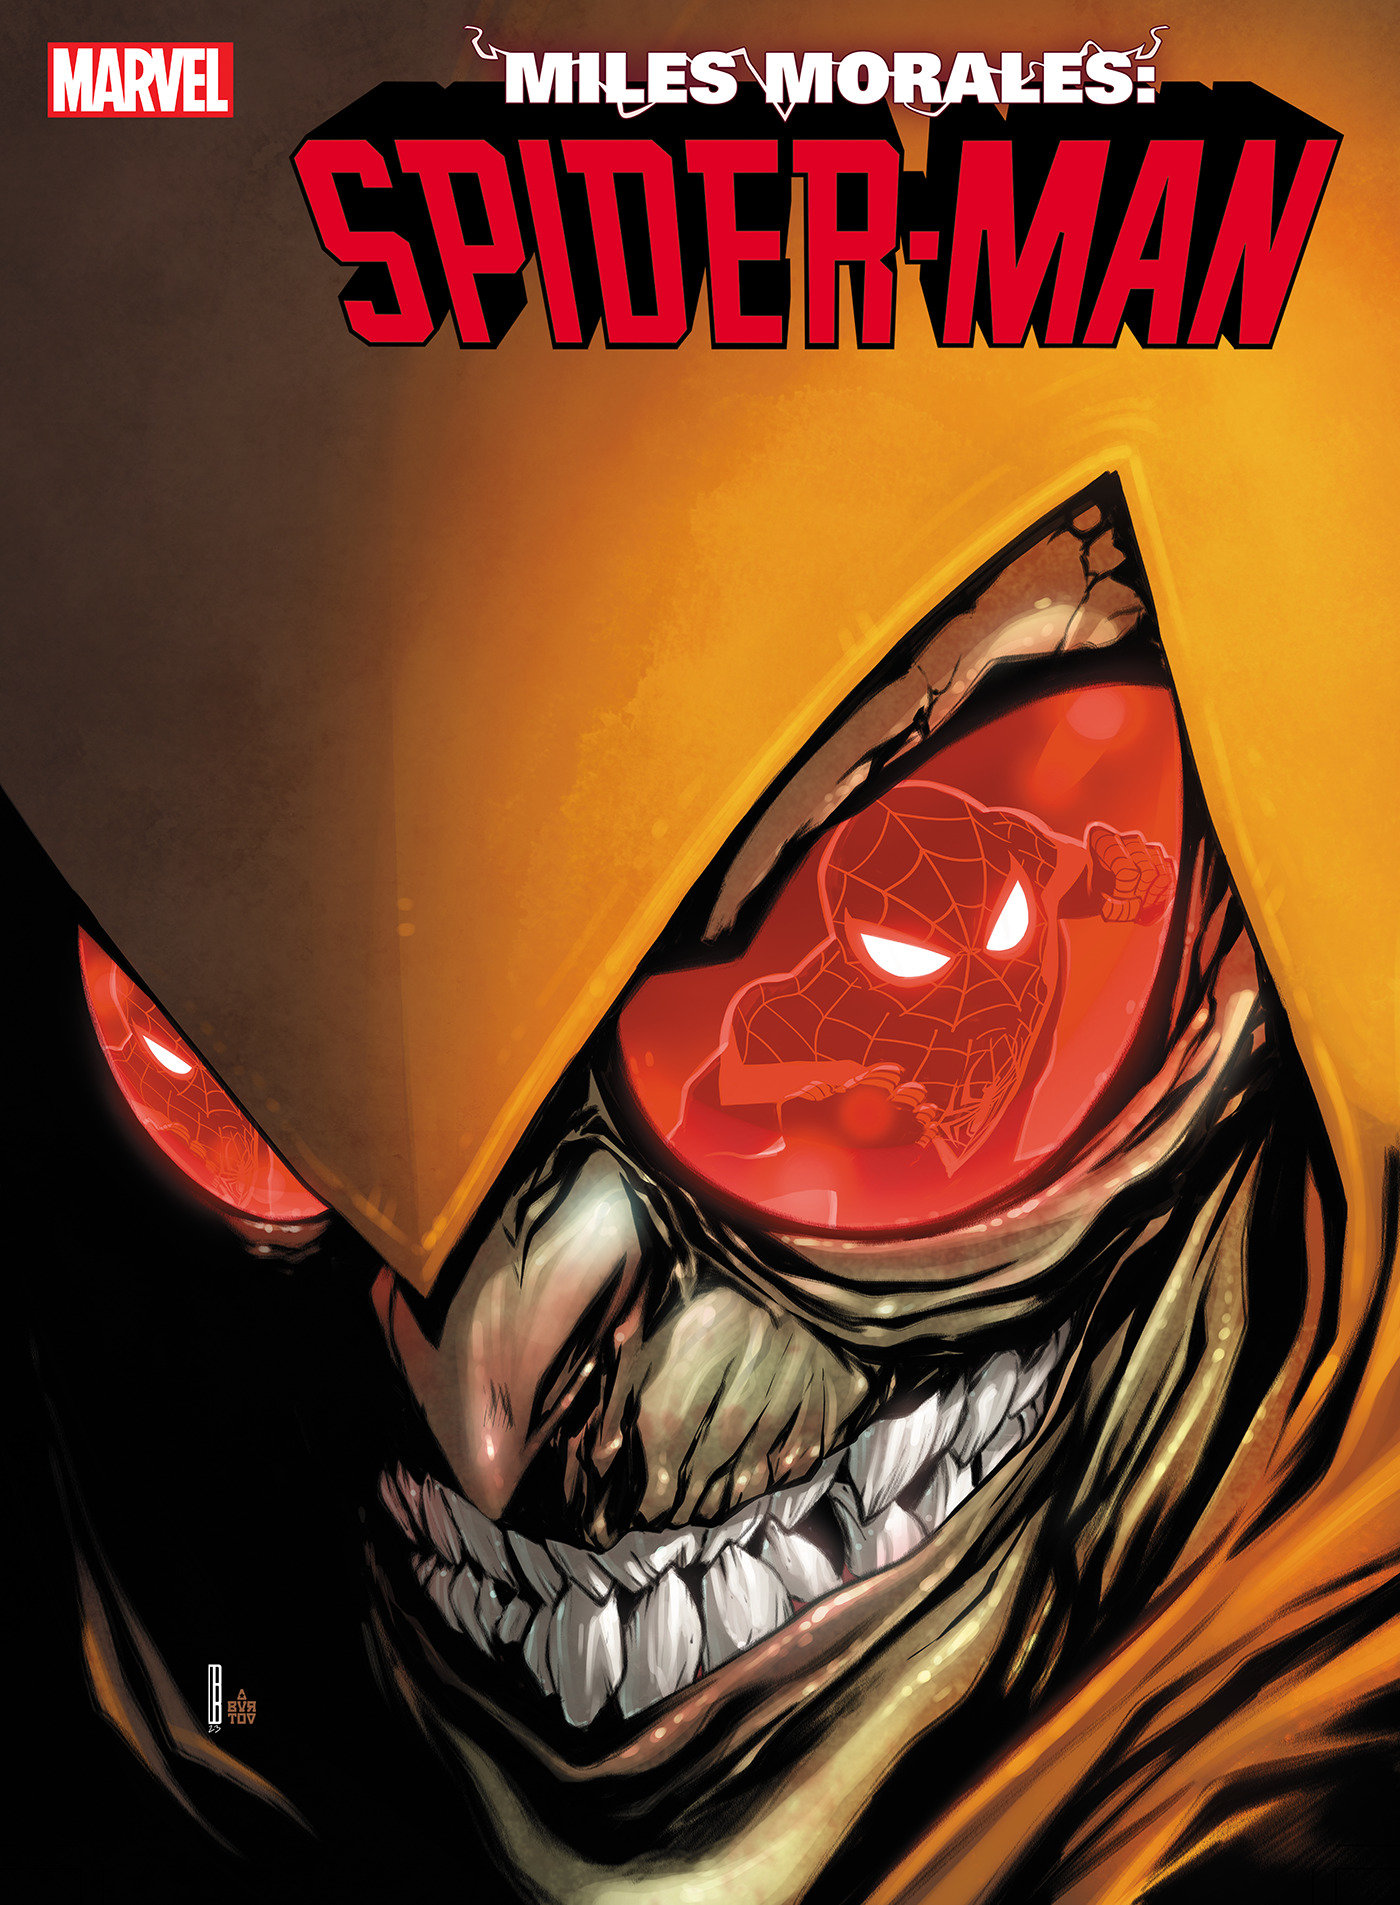 Miles Morales: Spider-Man #16 David Baldeon Variant (Gang War) 1 for 25 Incentive